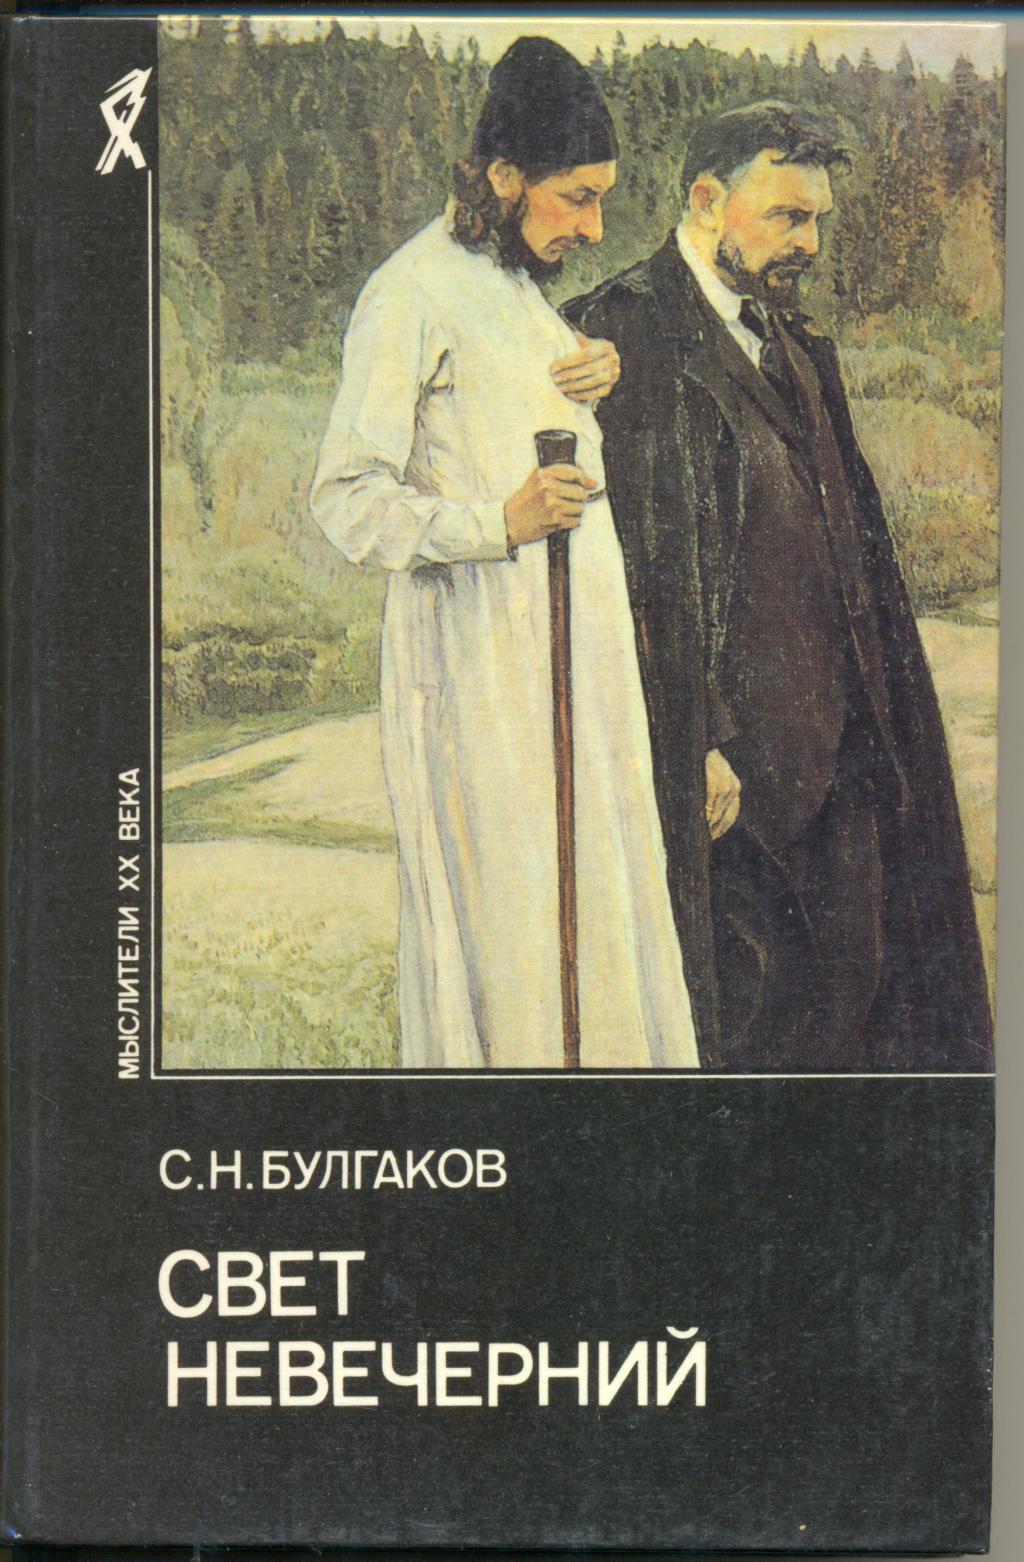 http://book-center.kiev.ua/files/books/2011/196.jpg